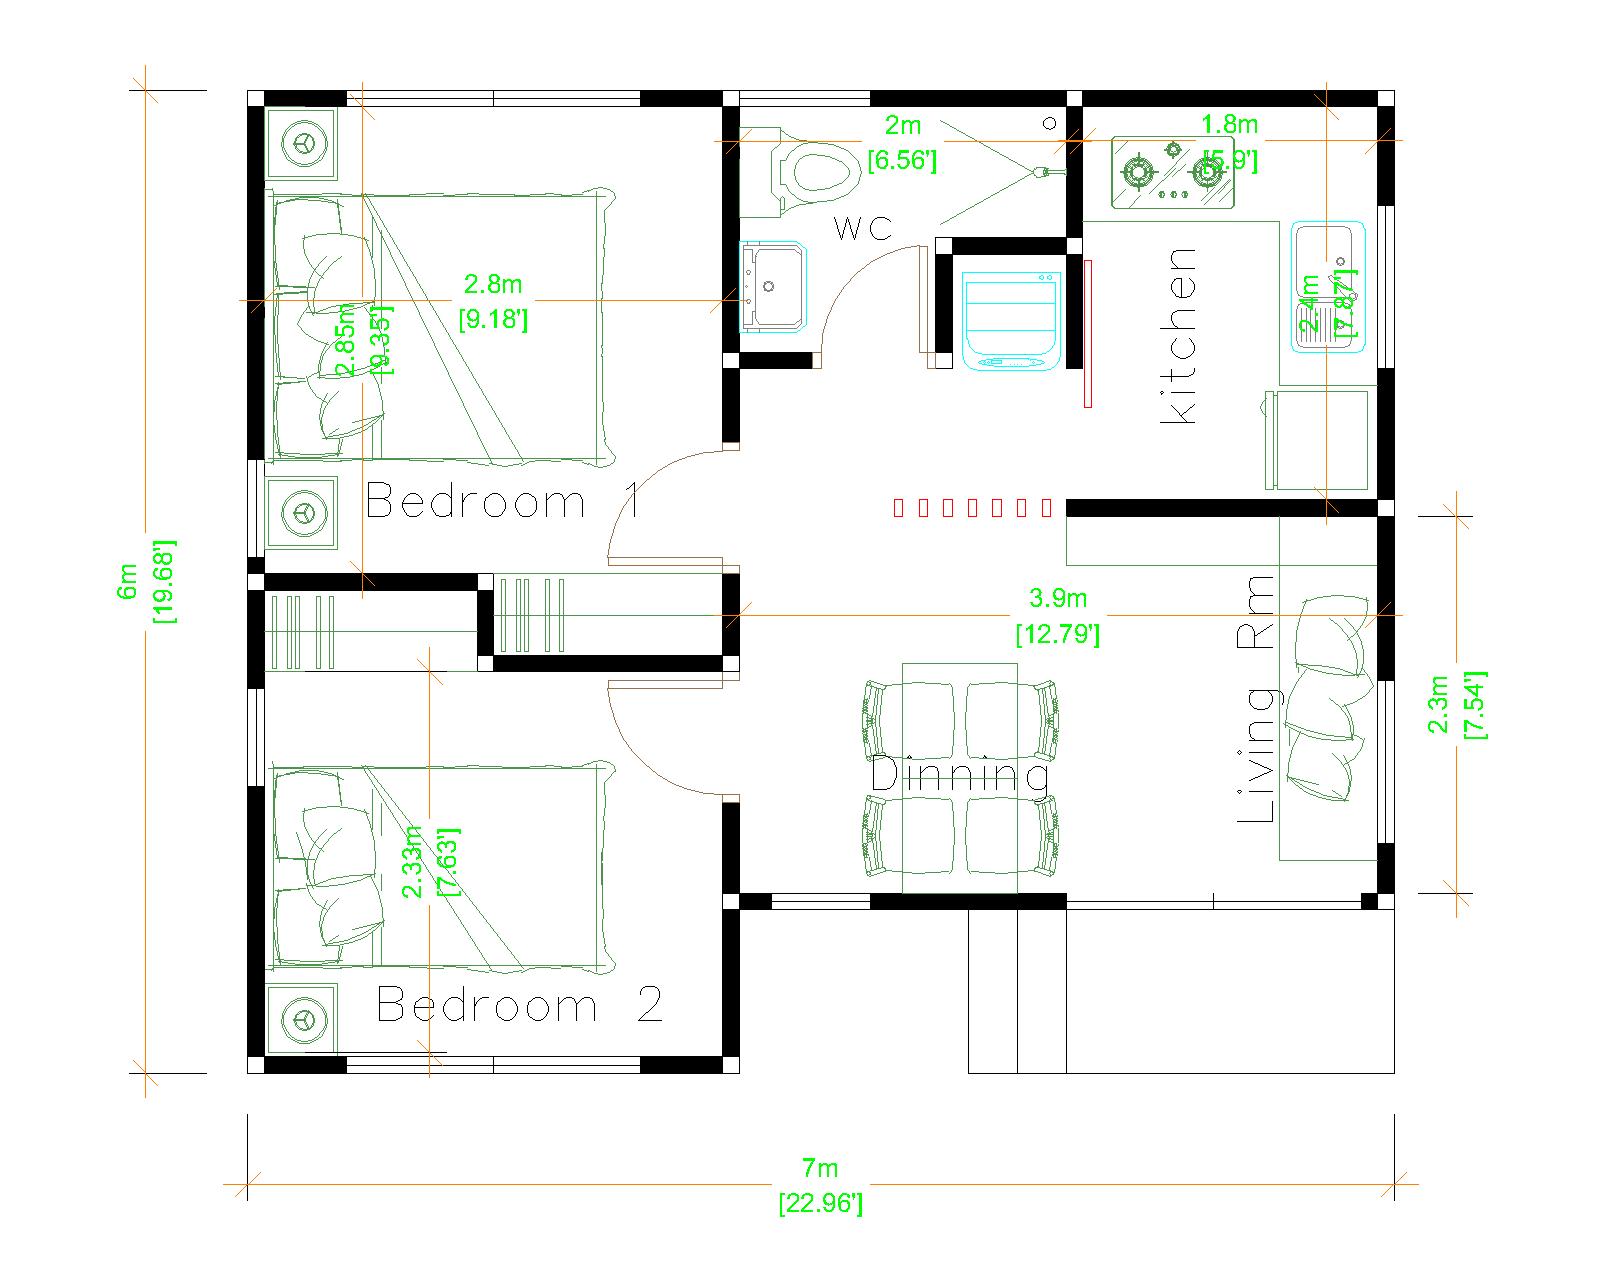 House Design 3d 7x6 Meter 23x20 Feet 2 bedrooms Gable Roof